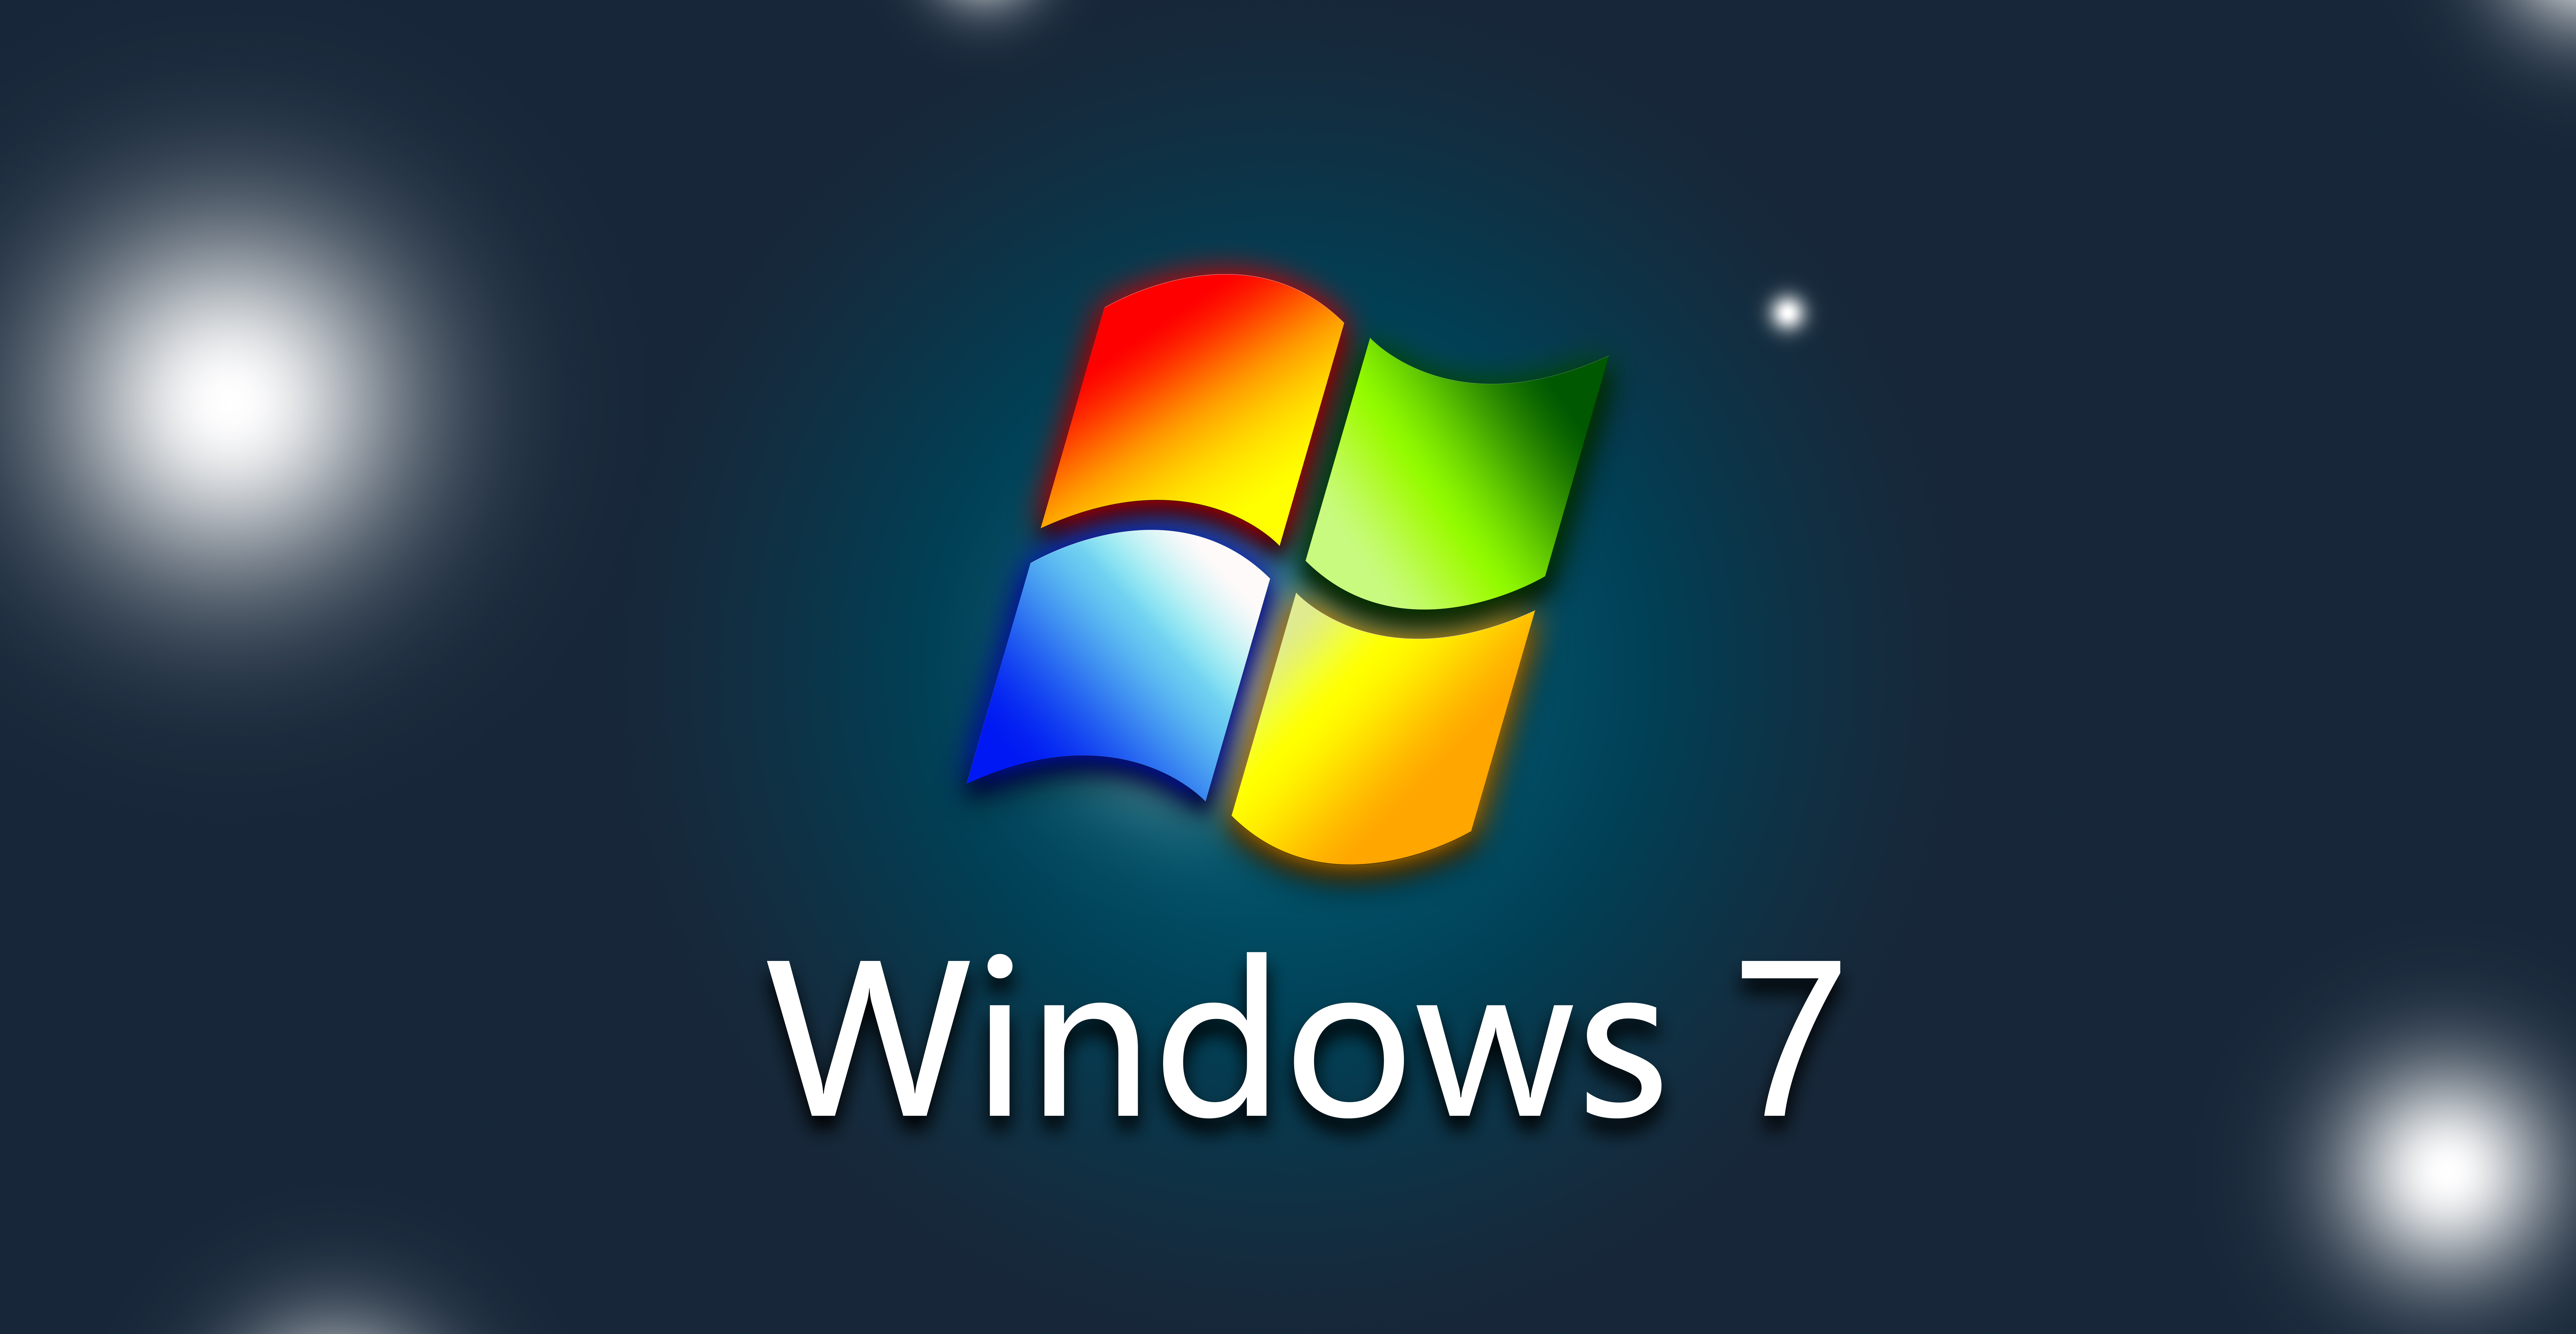 General 16853x8725 windows logo Microsoft operating system technology brand logo